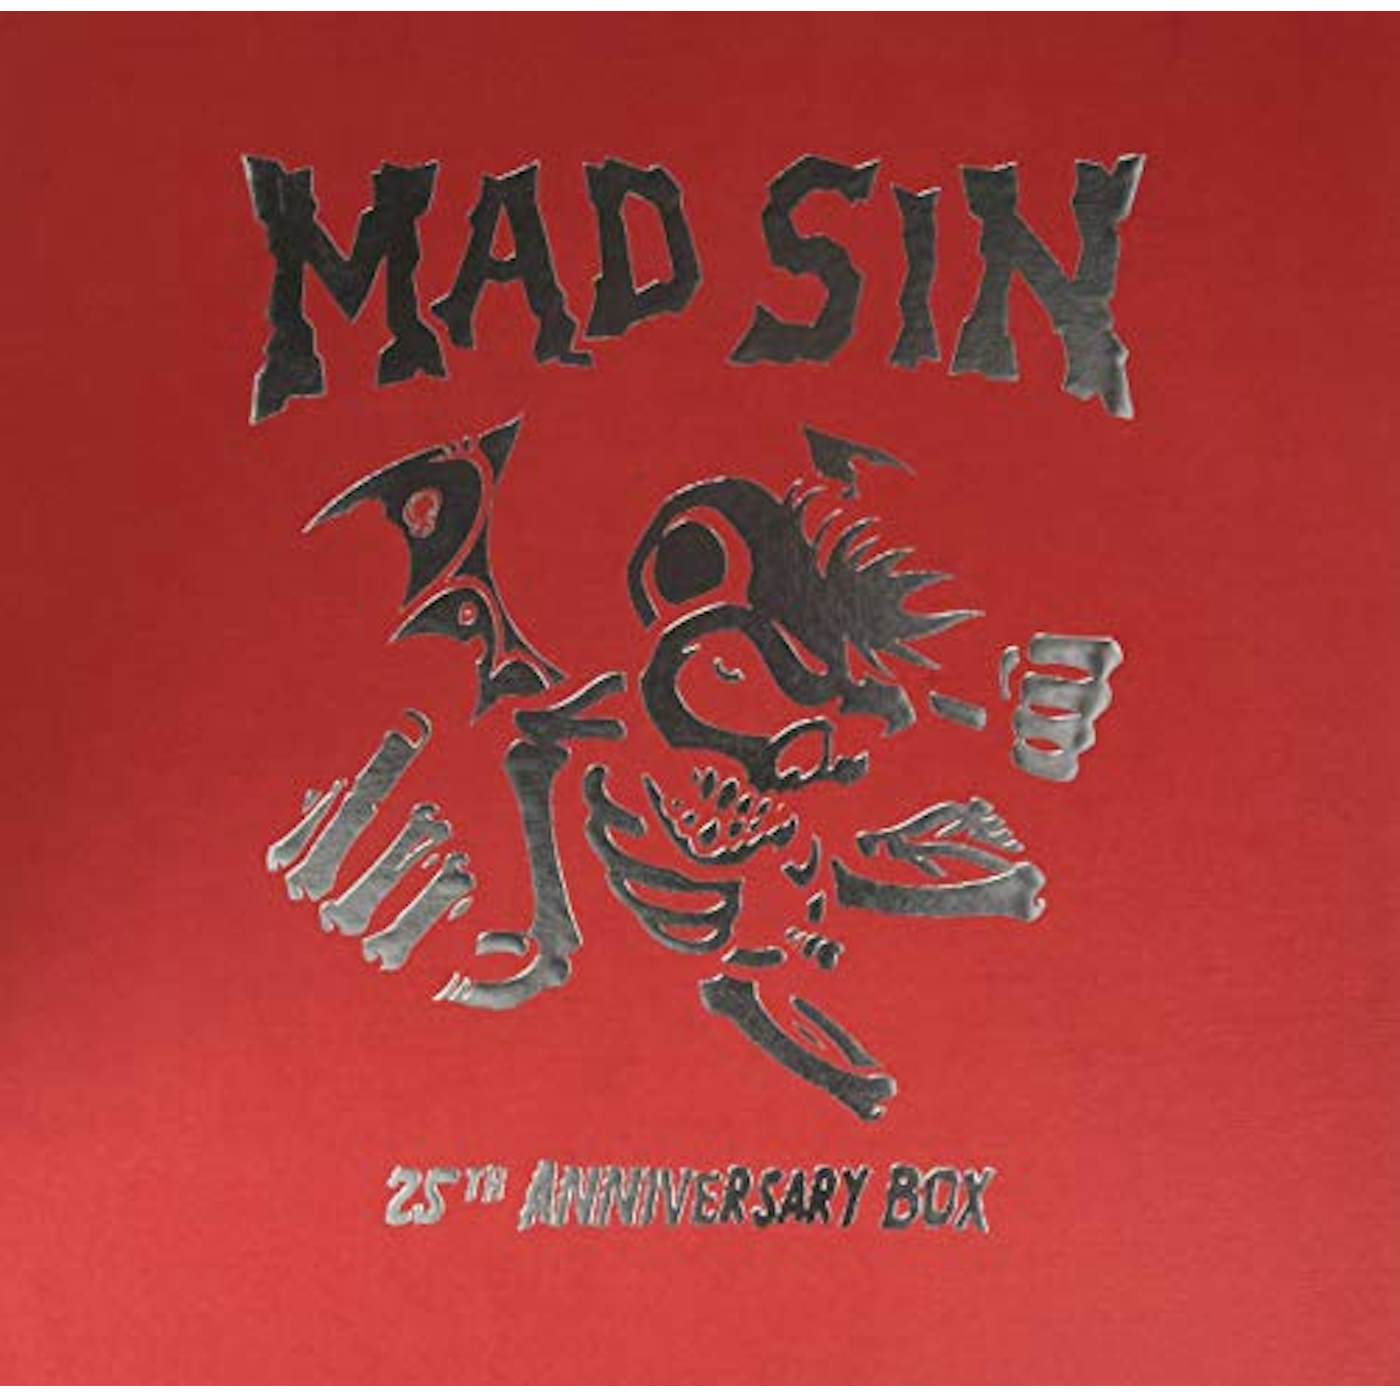 Mad Sin 25TH ANNIVERSARY BOX Vinyl Record